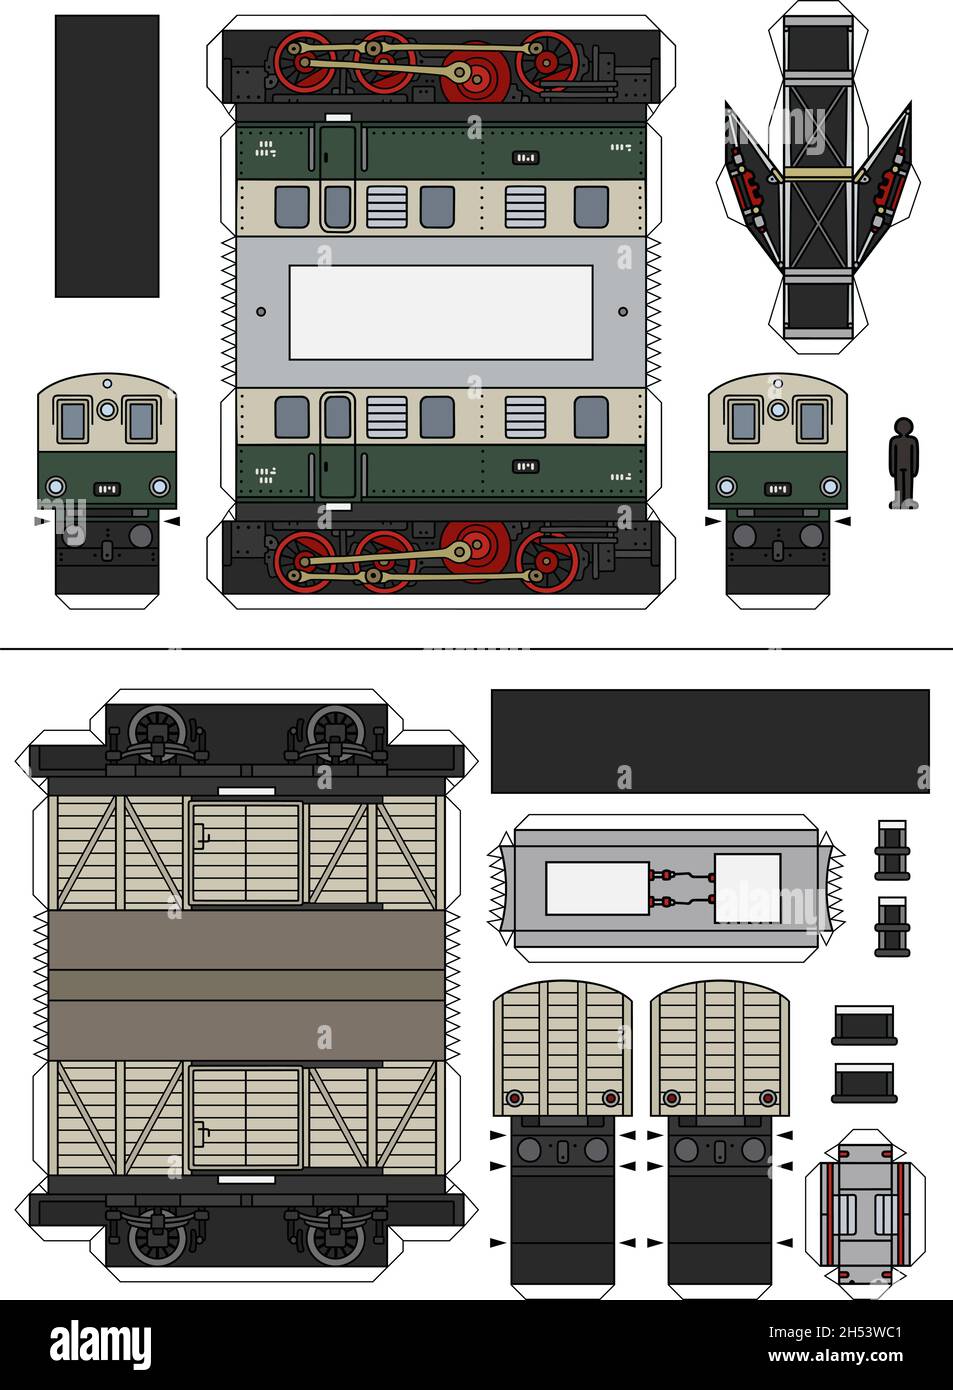 Papercraft Train Templates